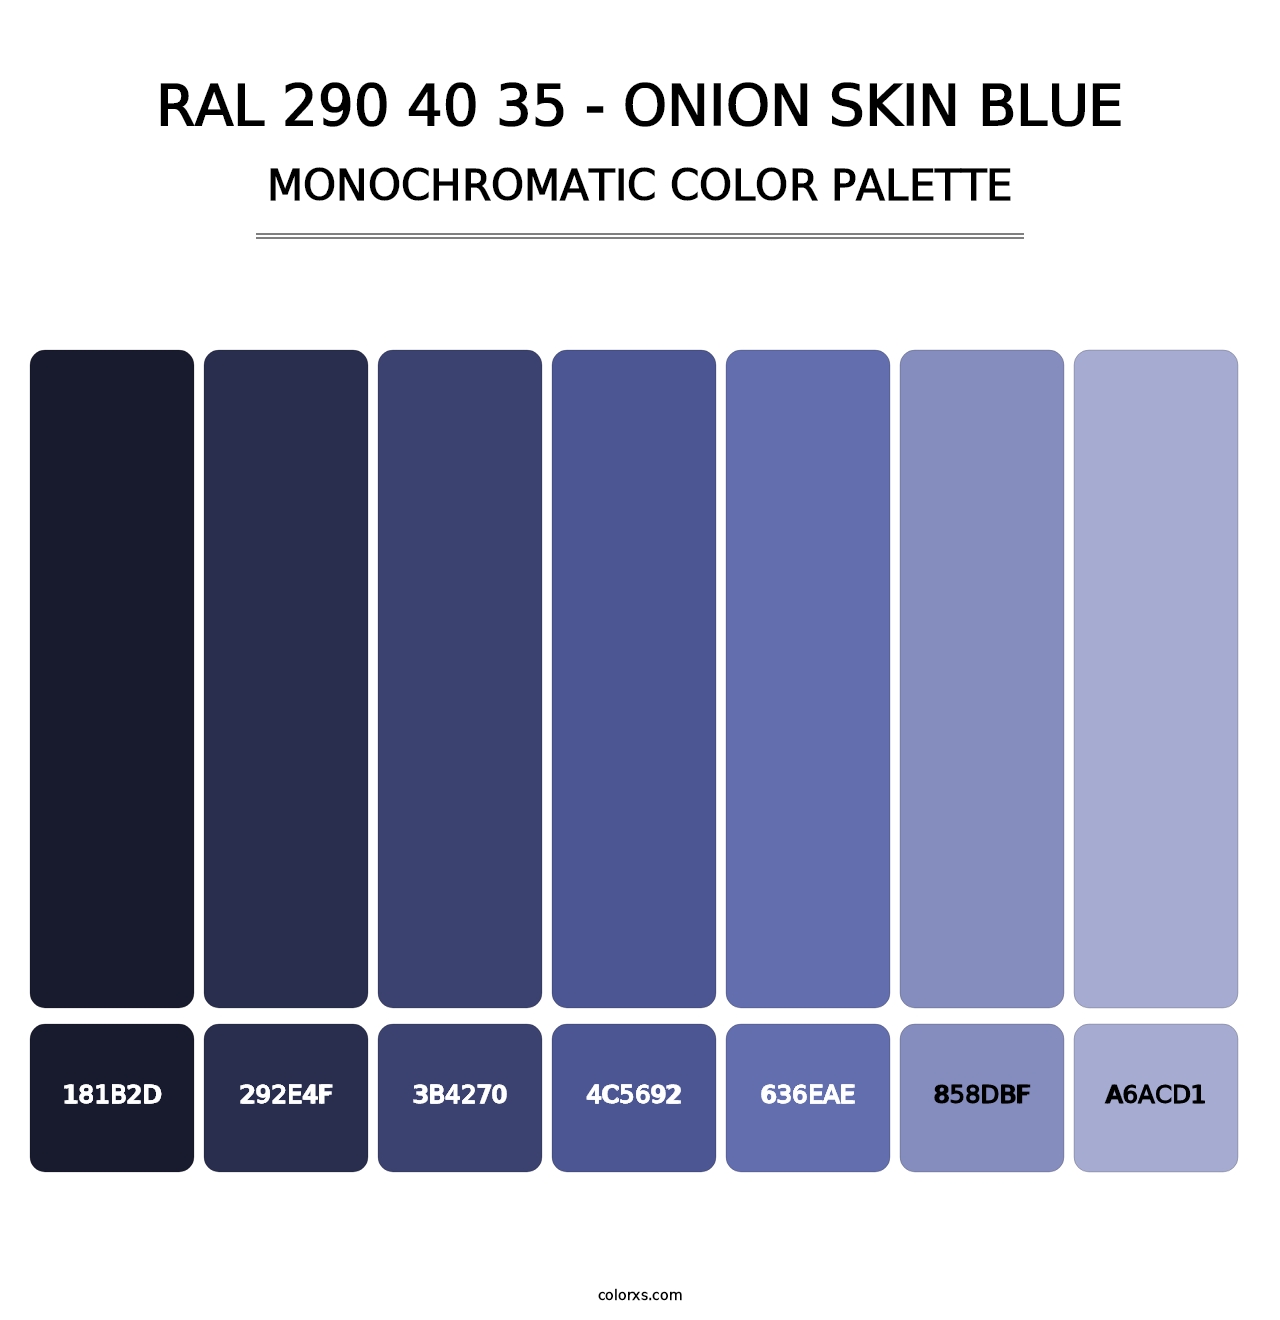 RAL 290 40 35 - Onion Skin Blue - Monochromatic Color Palette